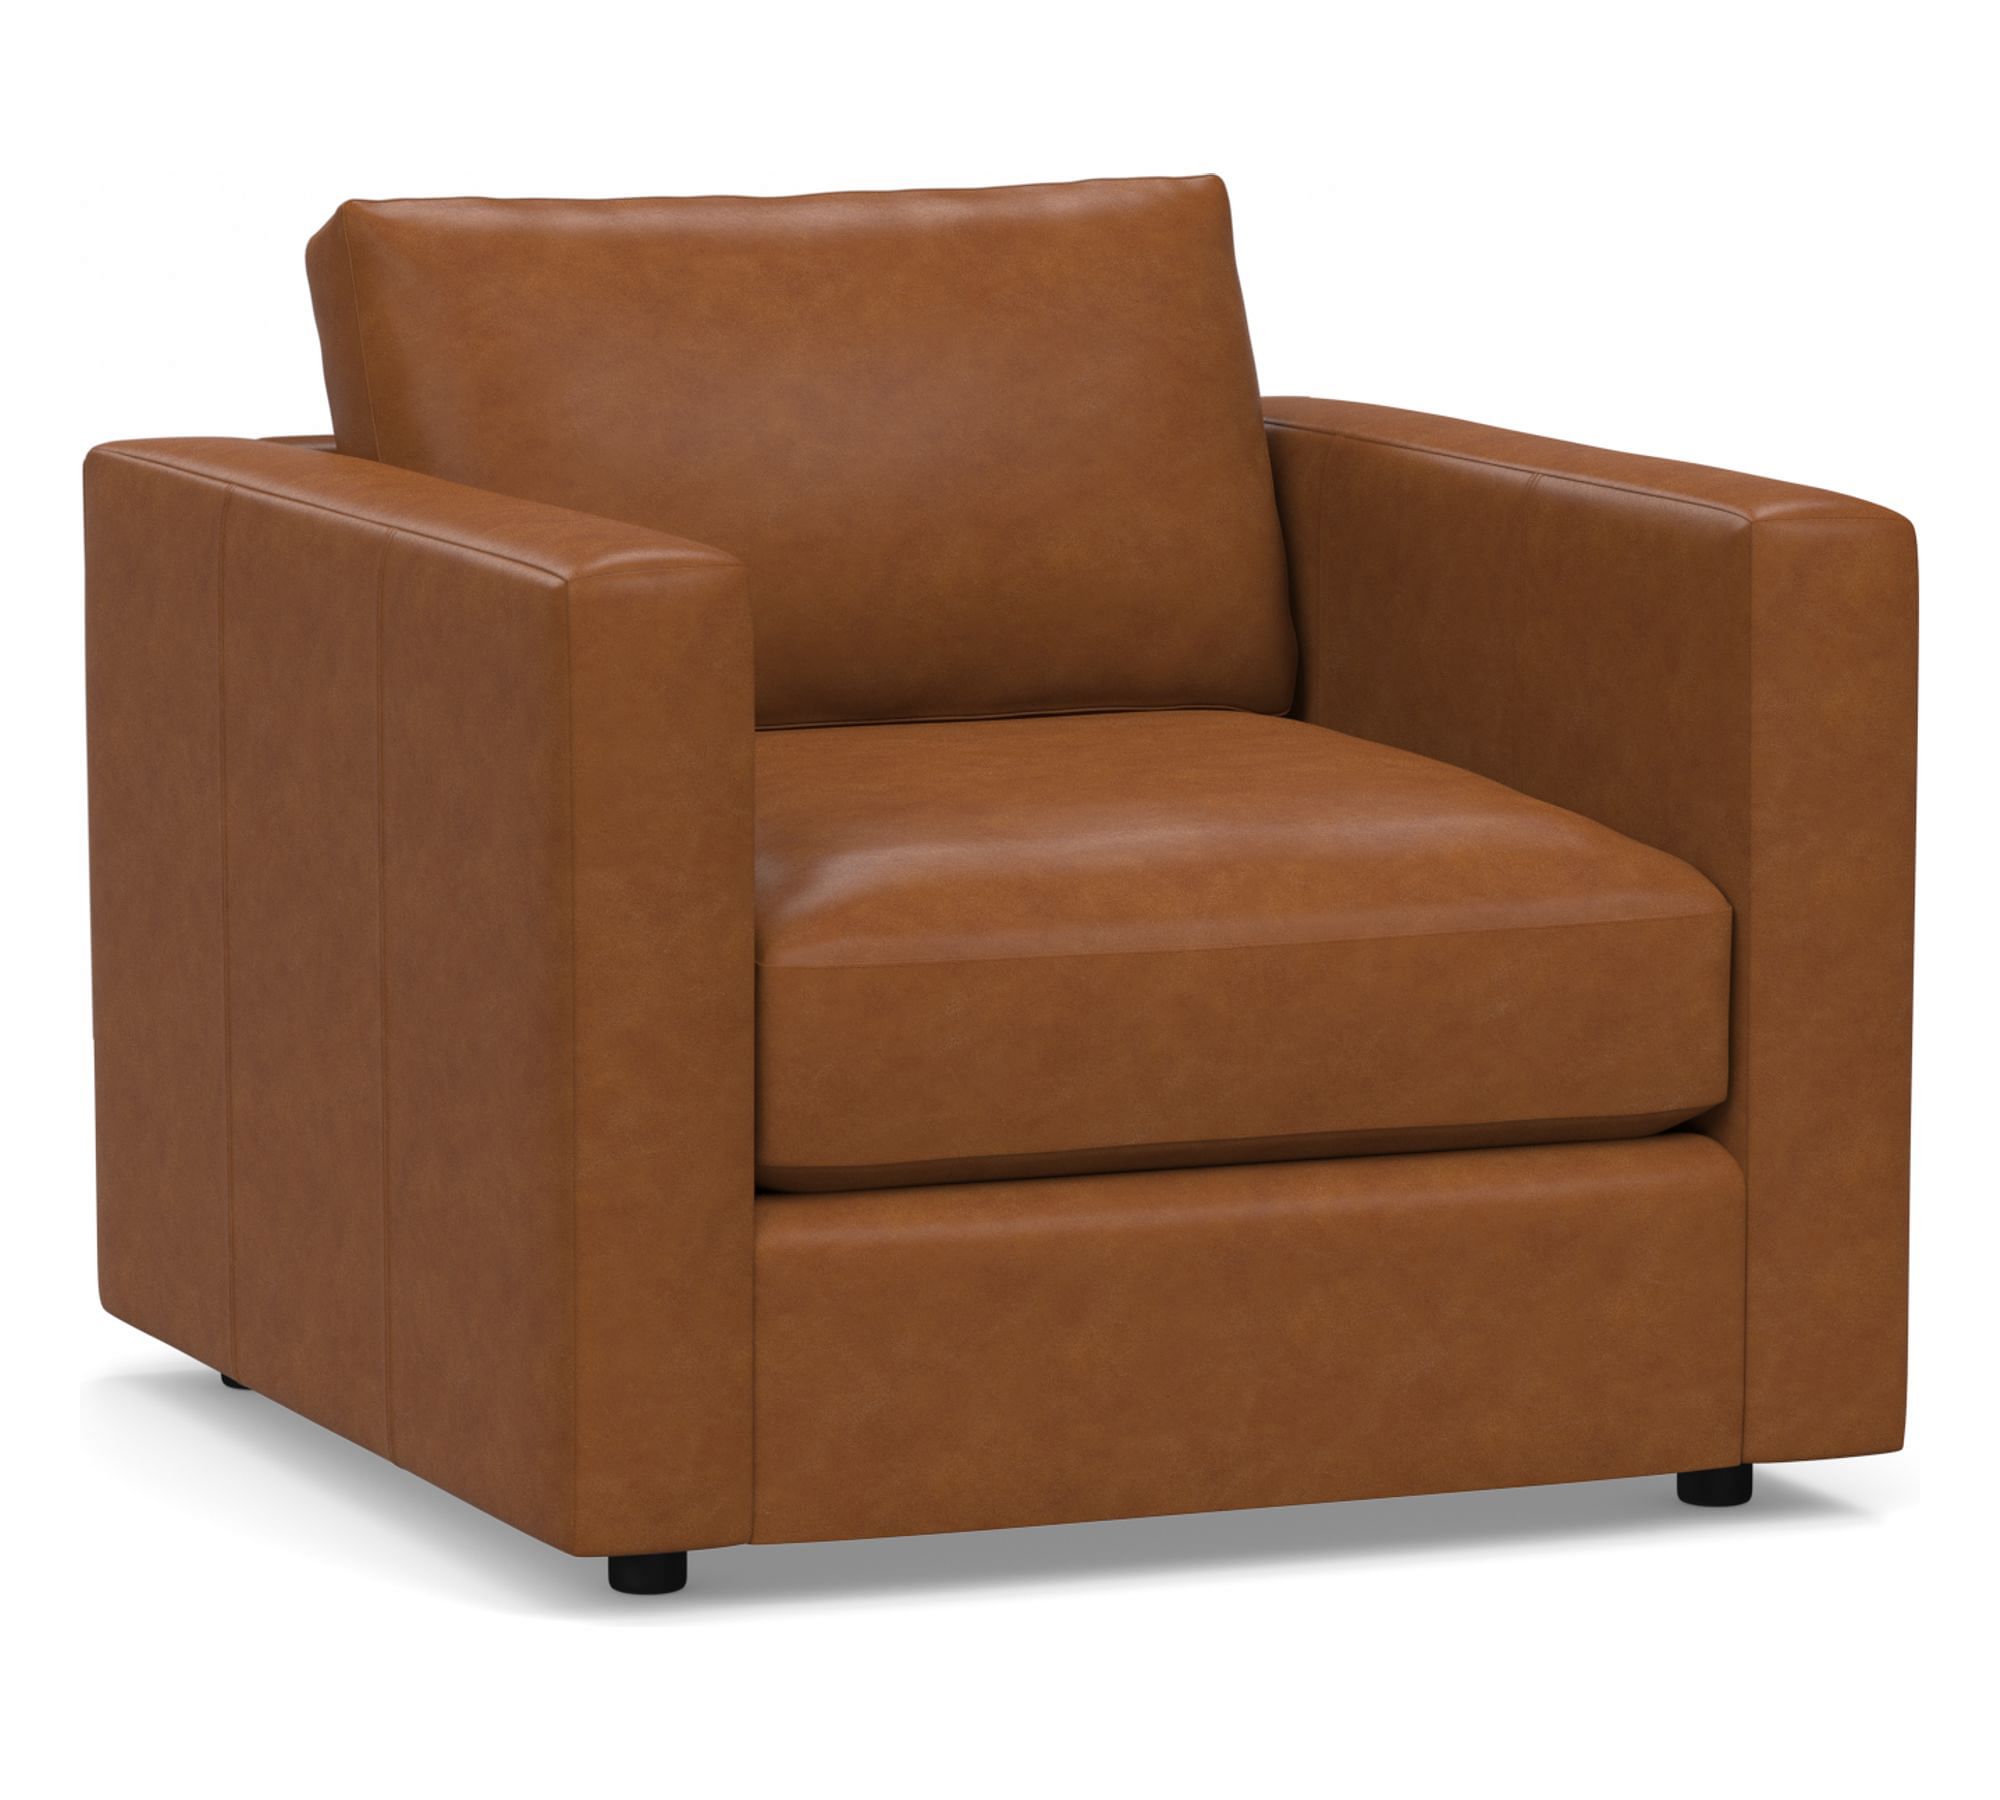 Jake Modular Leather Chair